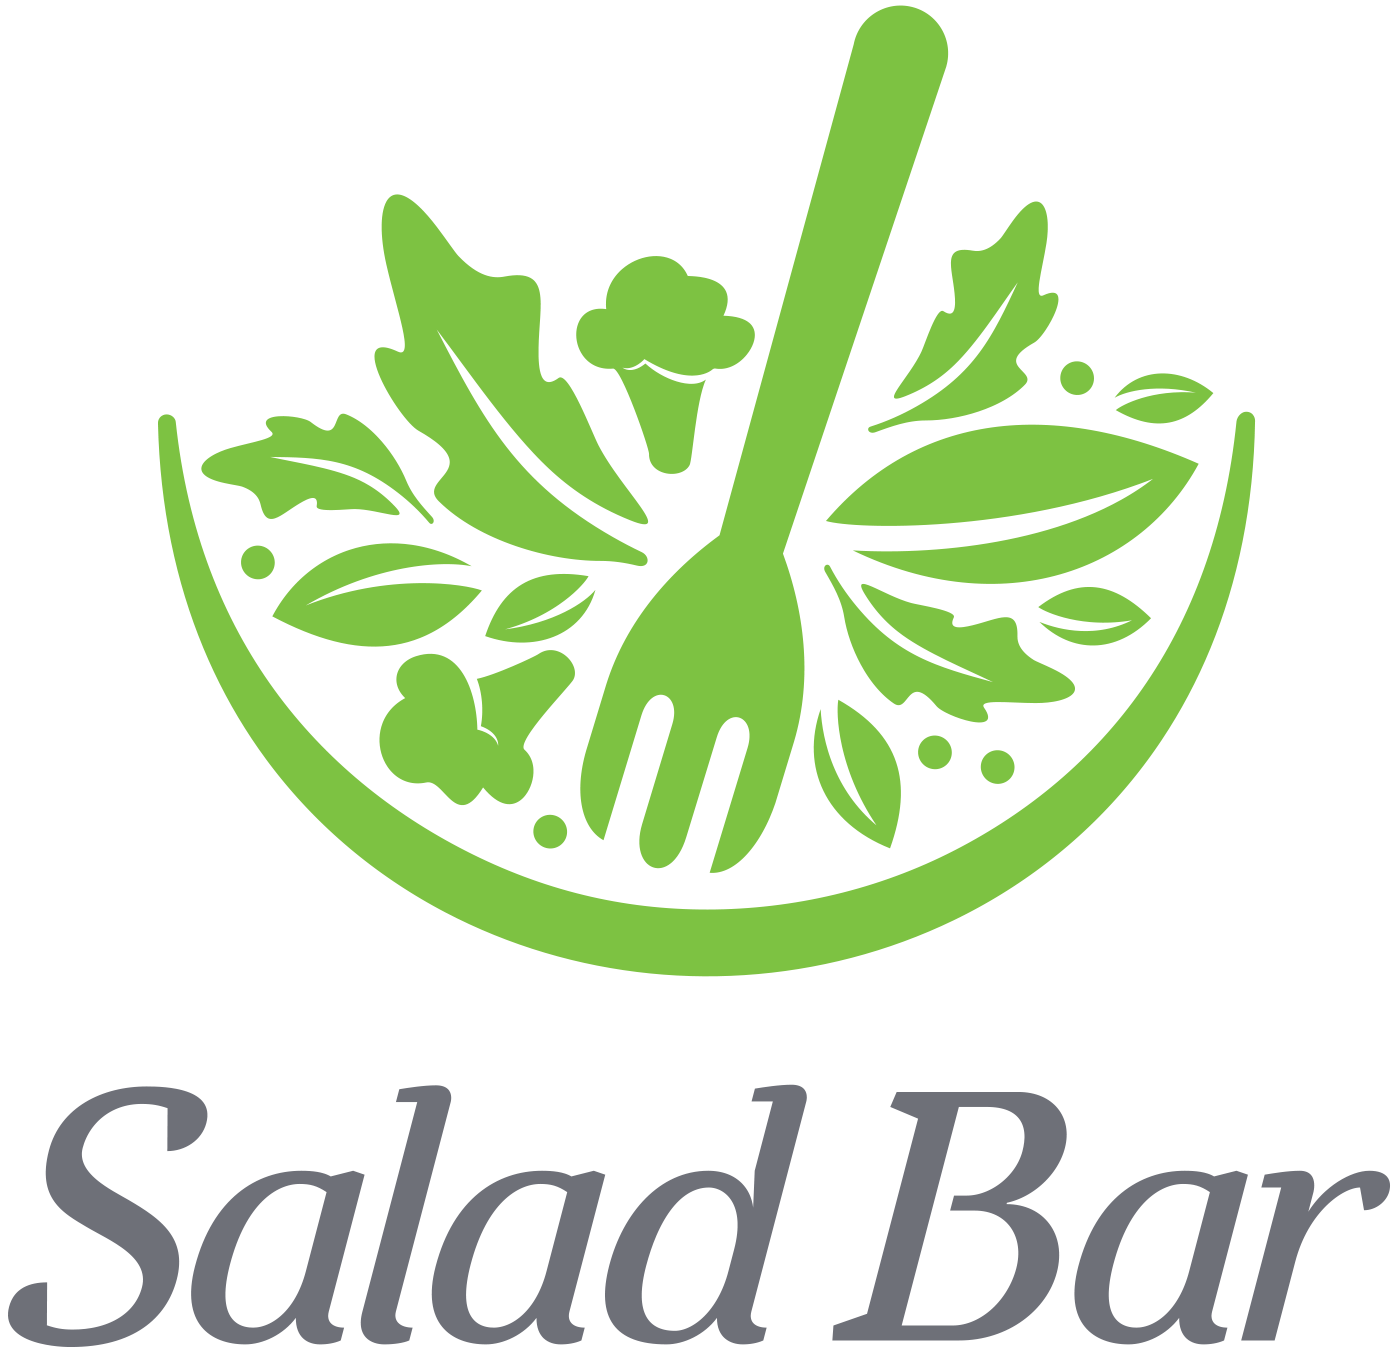 SaladBar - ﻃﺎوﻟﺔ اﻟﺴﻠﻄﺔ